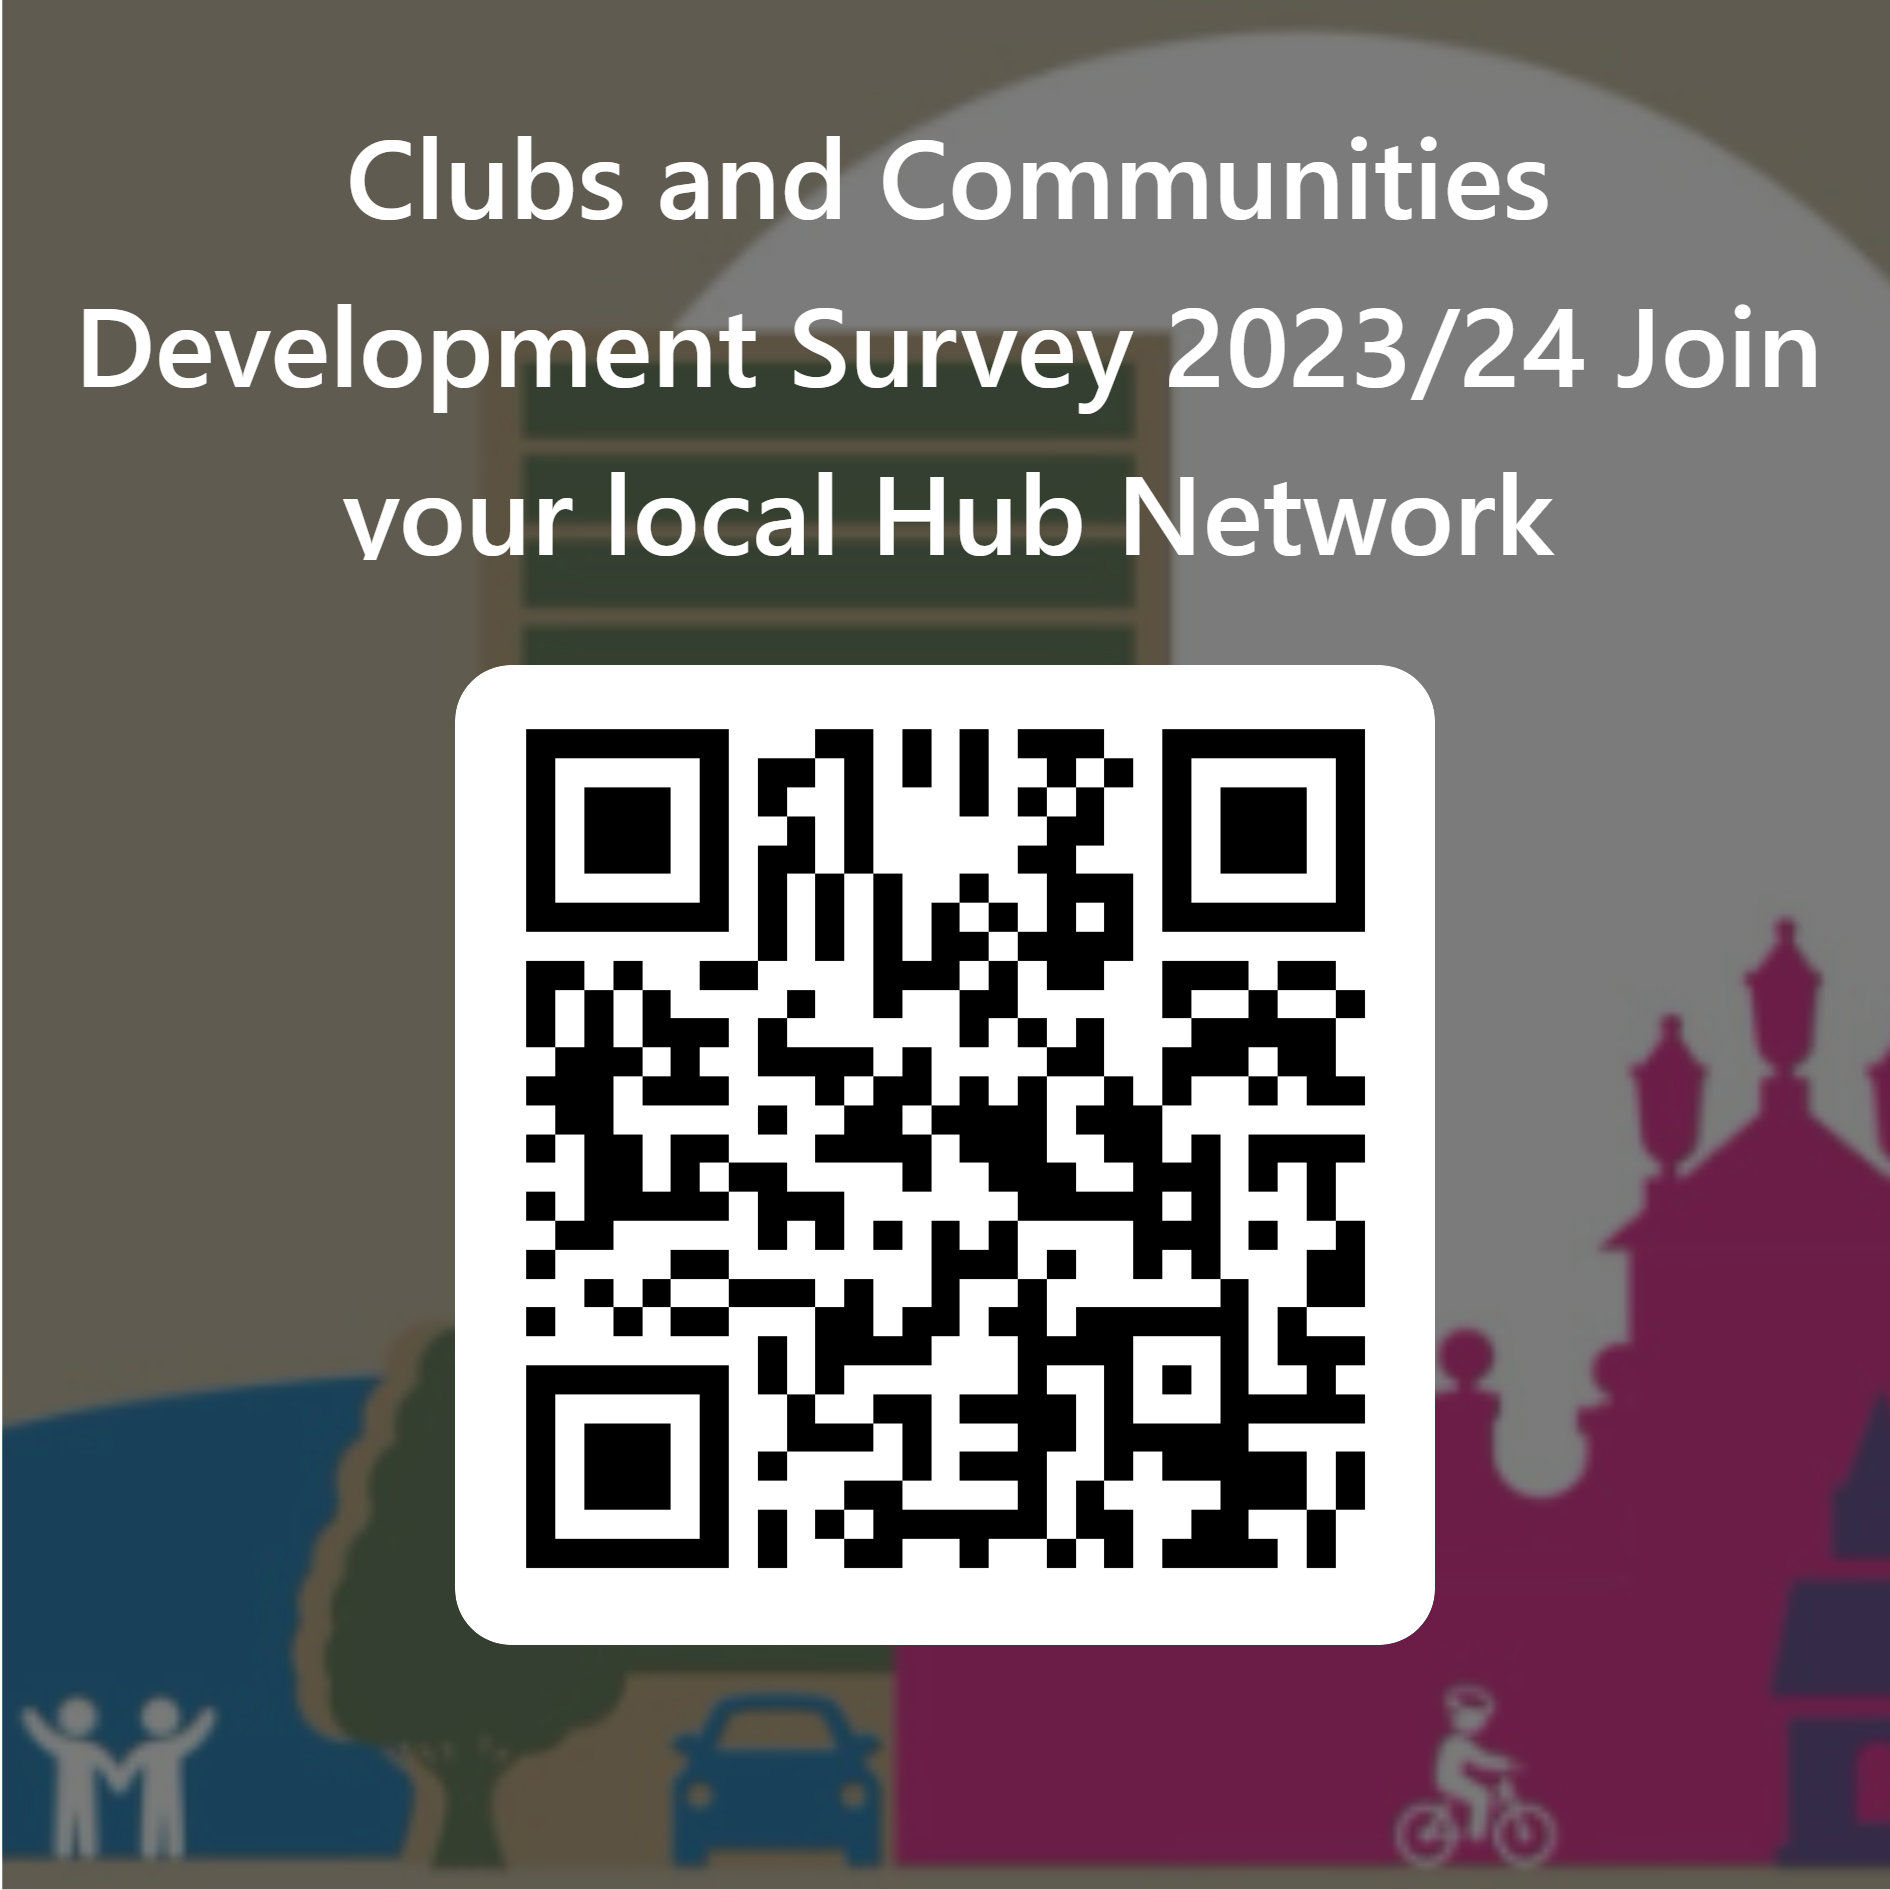 QR code for clubs and communities development survey 2023-24